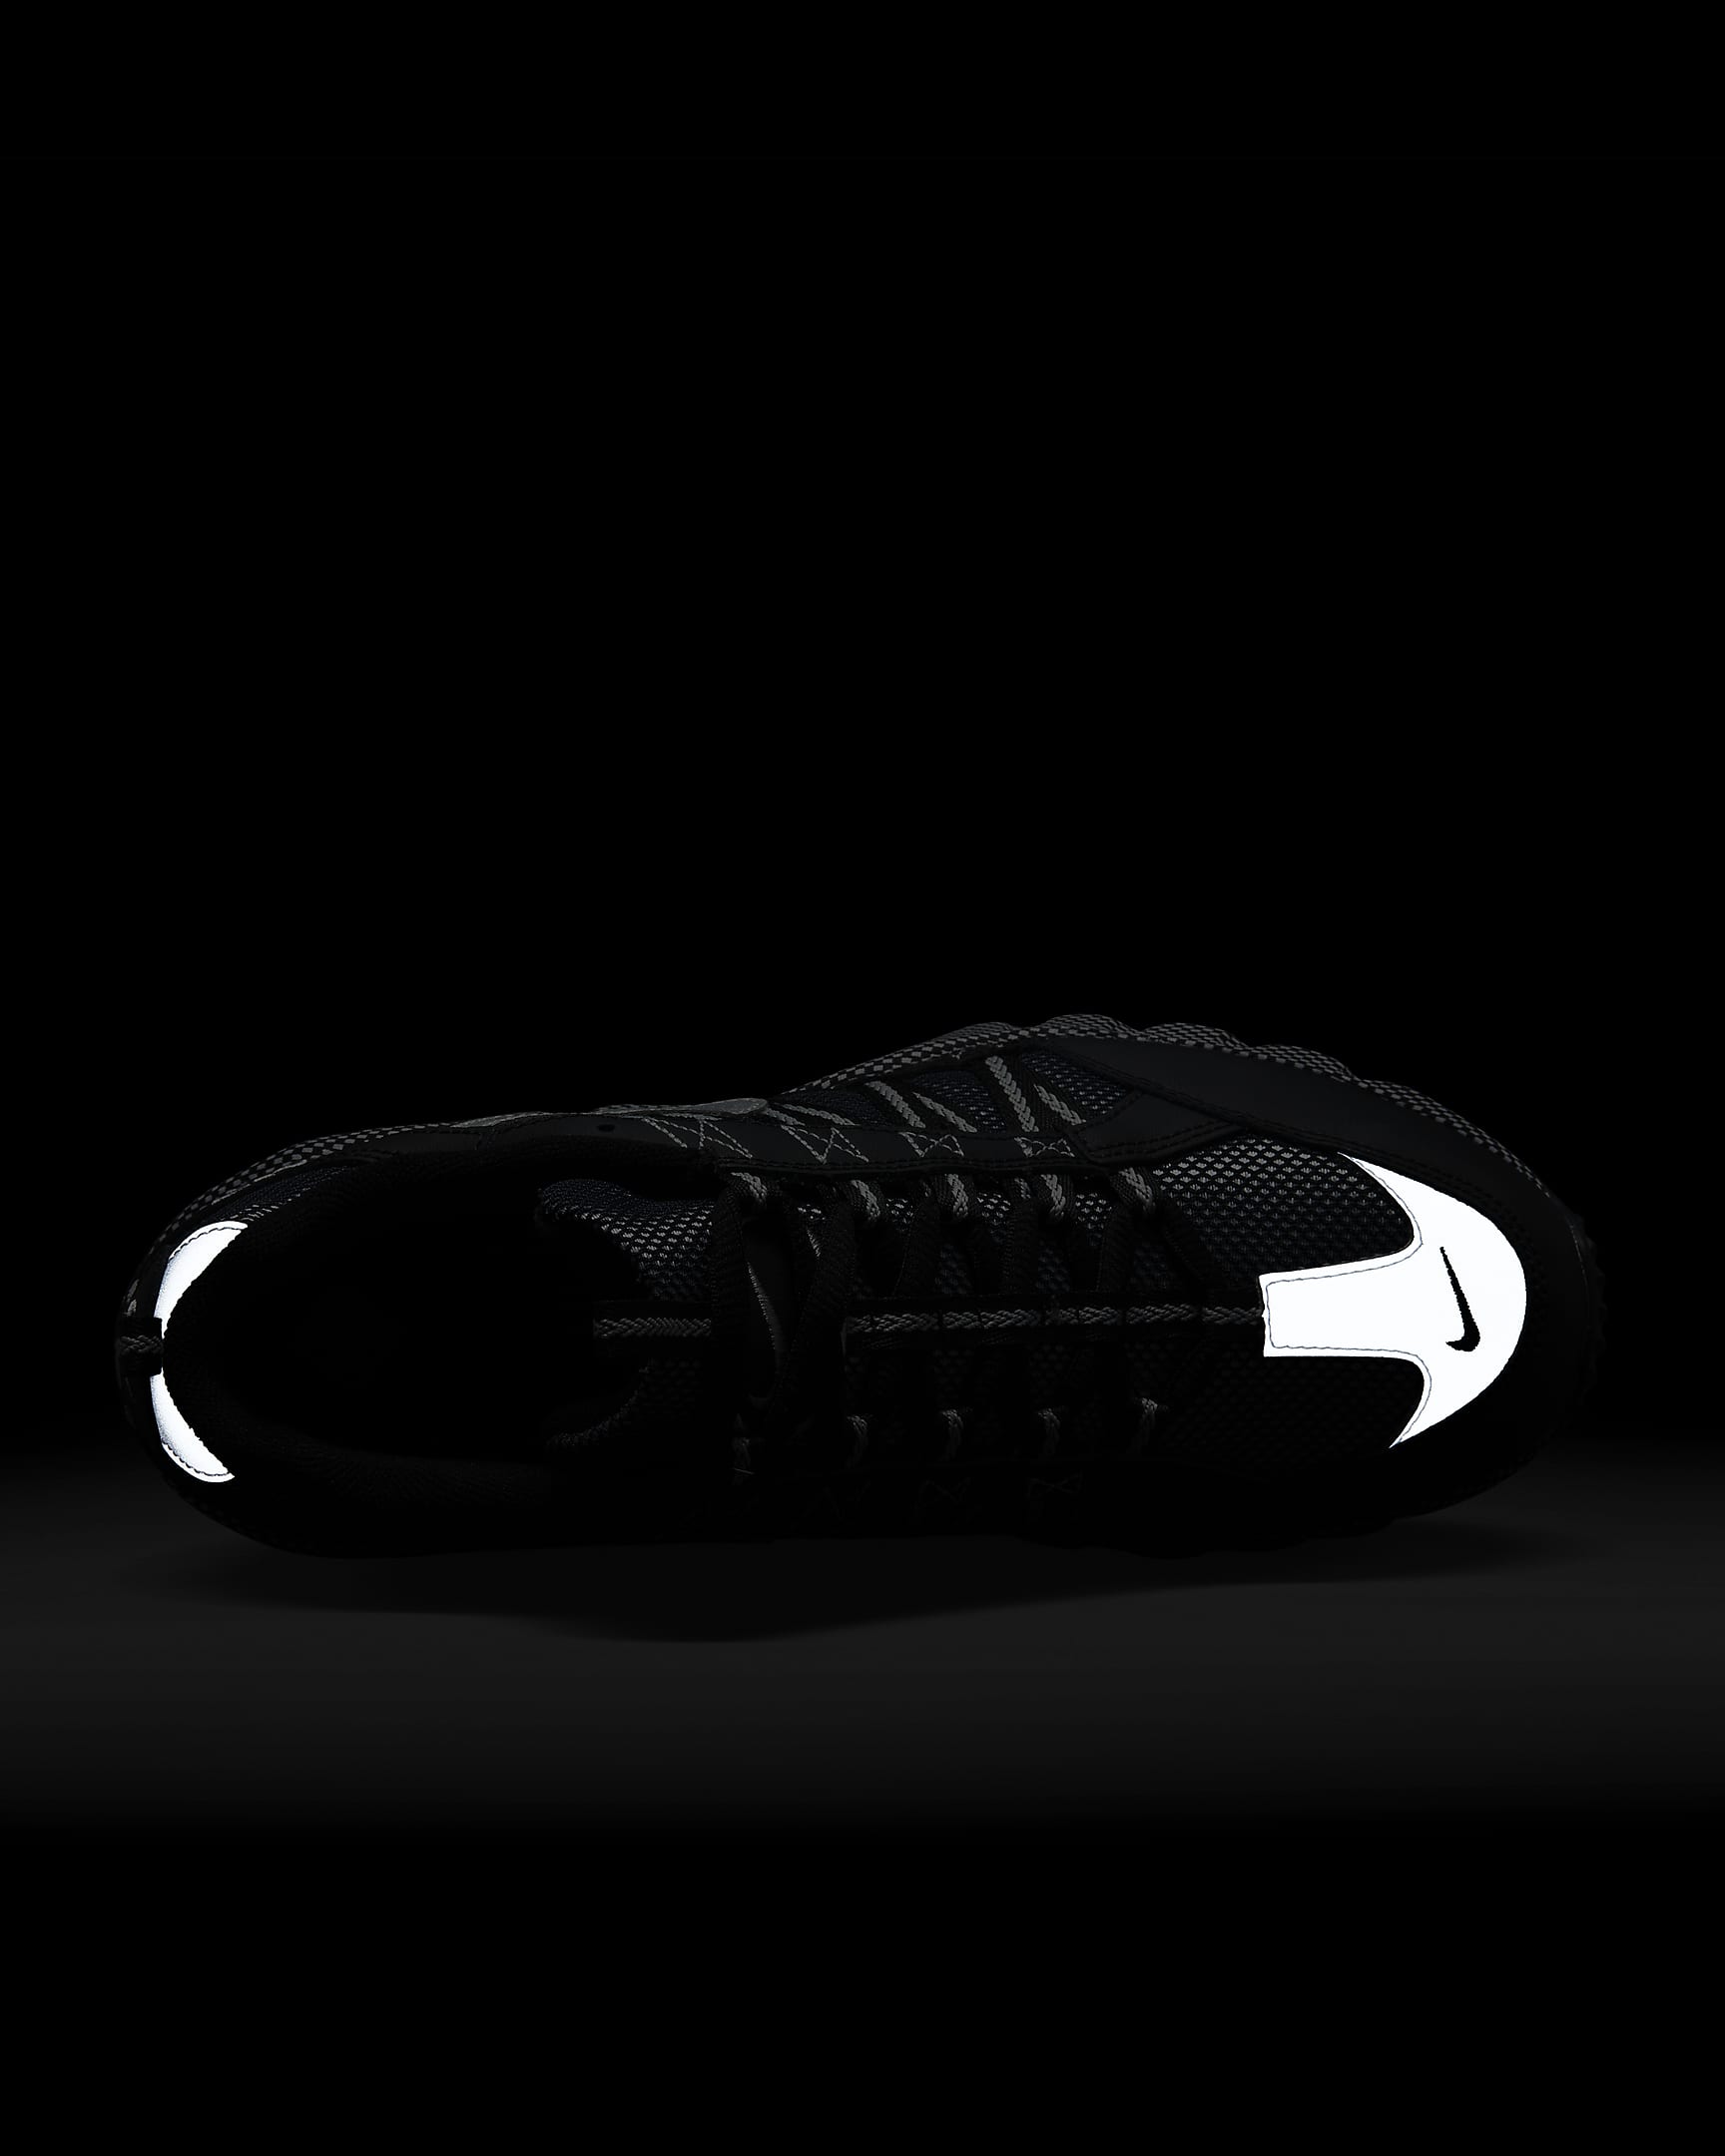 Nike Air Humara Men's Shoes - Black/Metallic Silver/Black/Metallic Silver